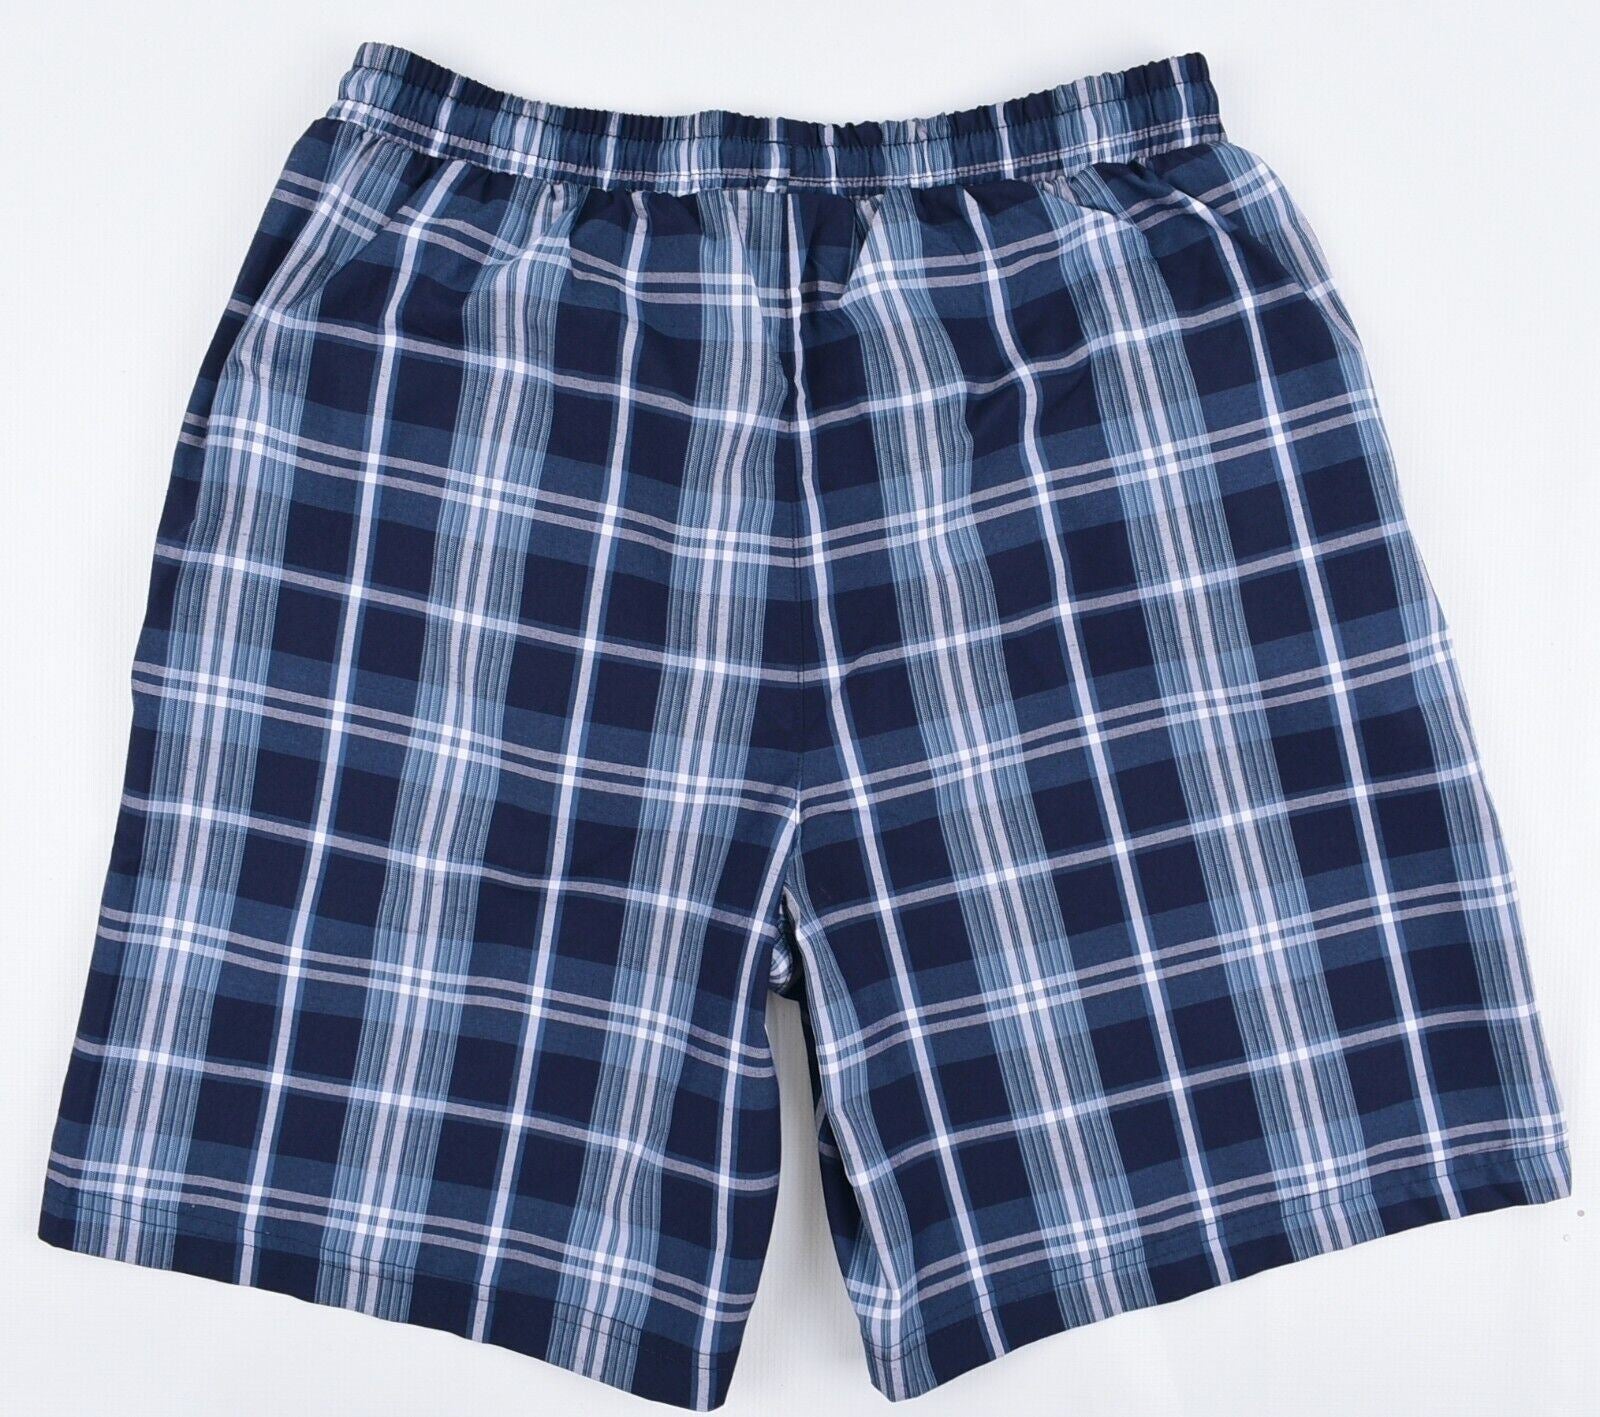 SLAZENGER Men's Blue Checked Shorts, size SMALL